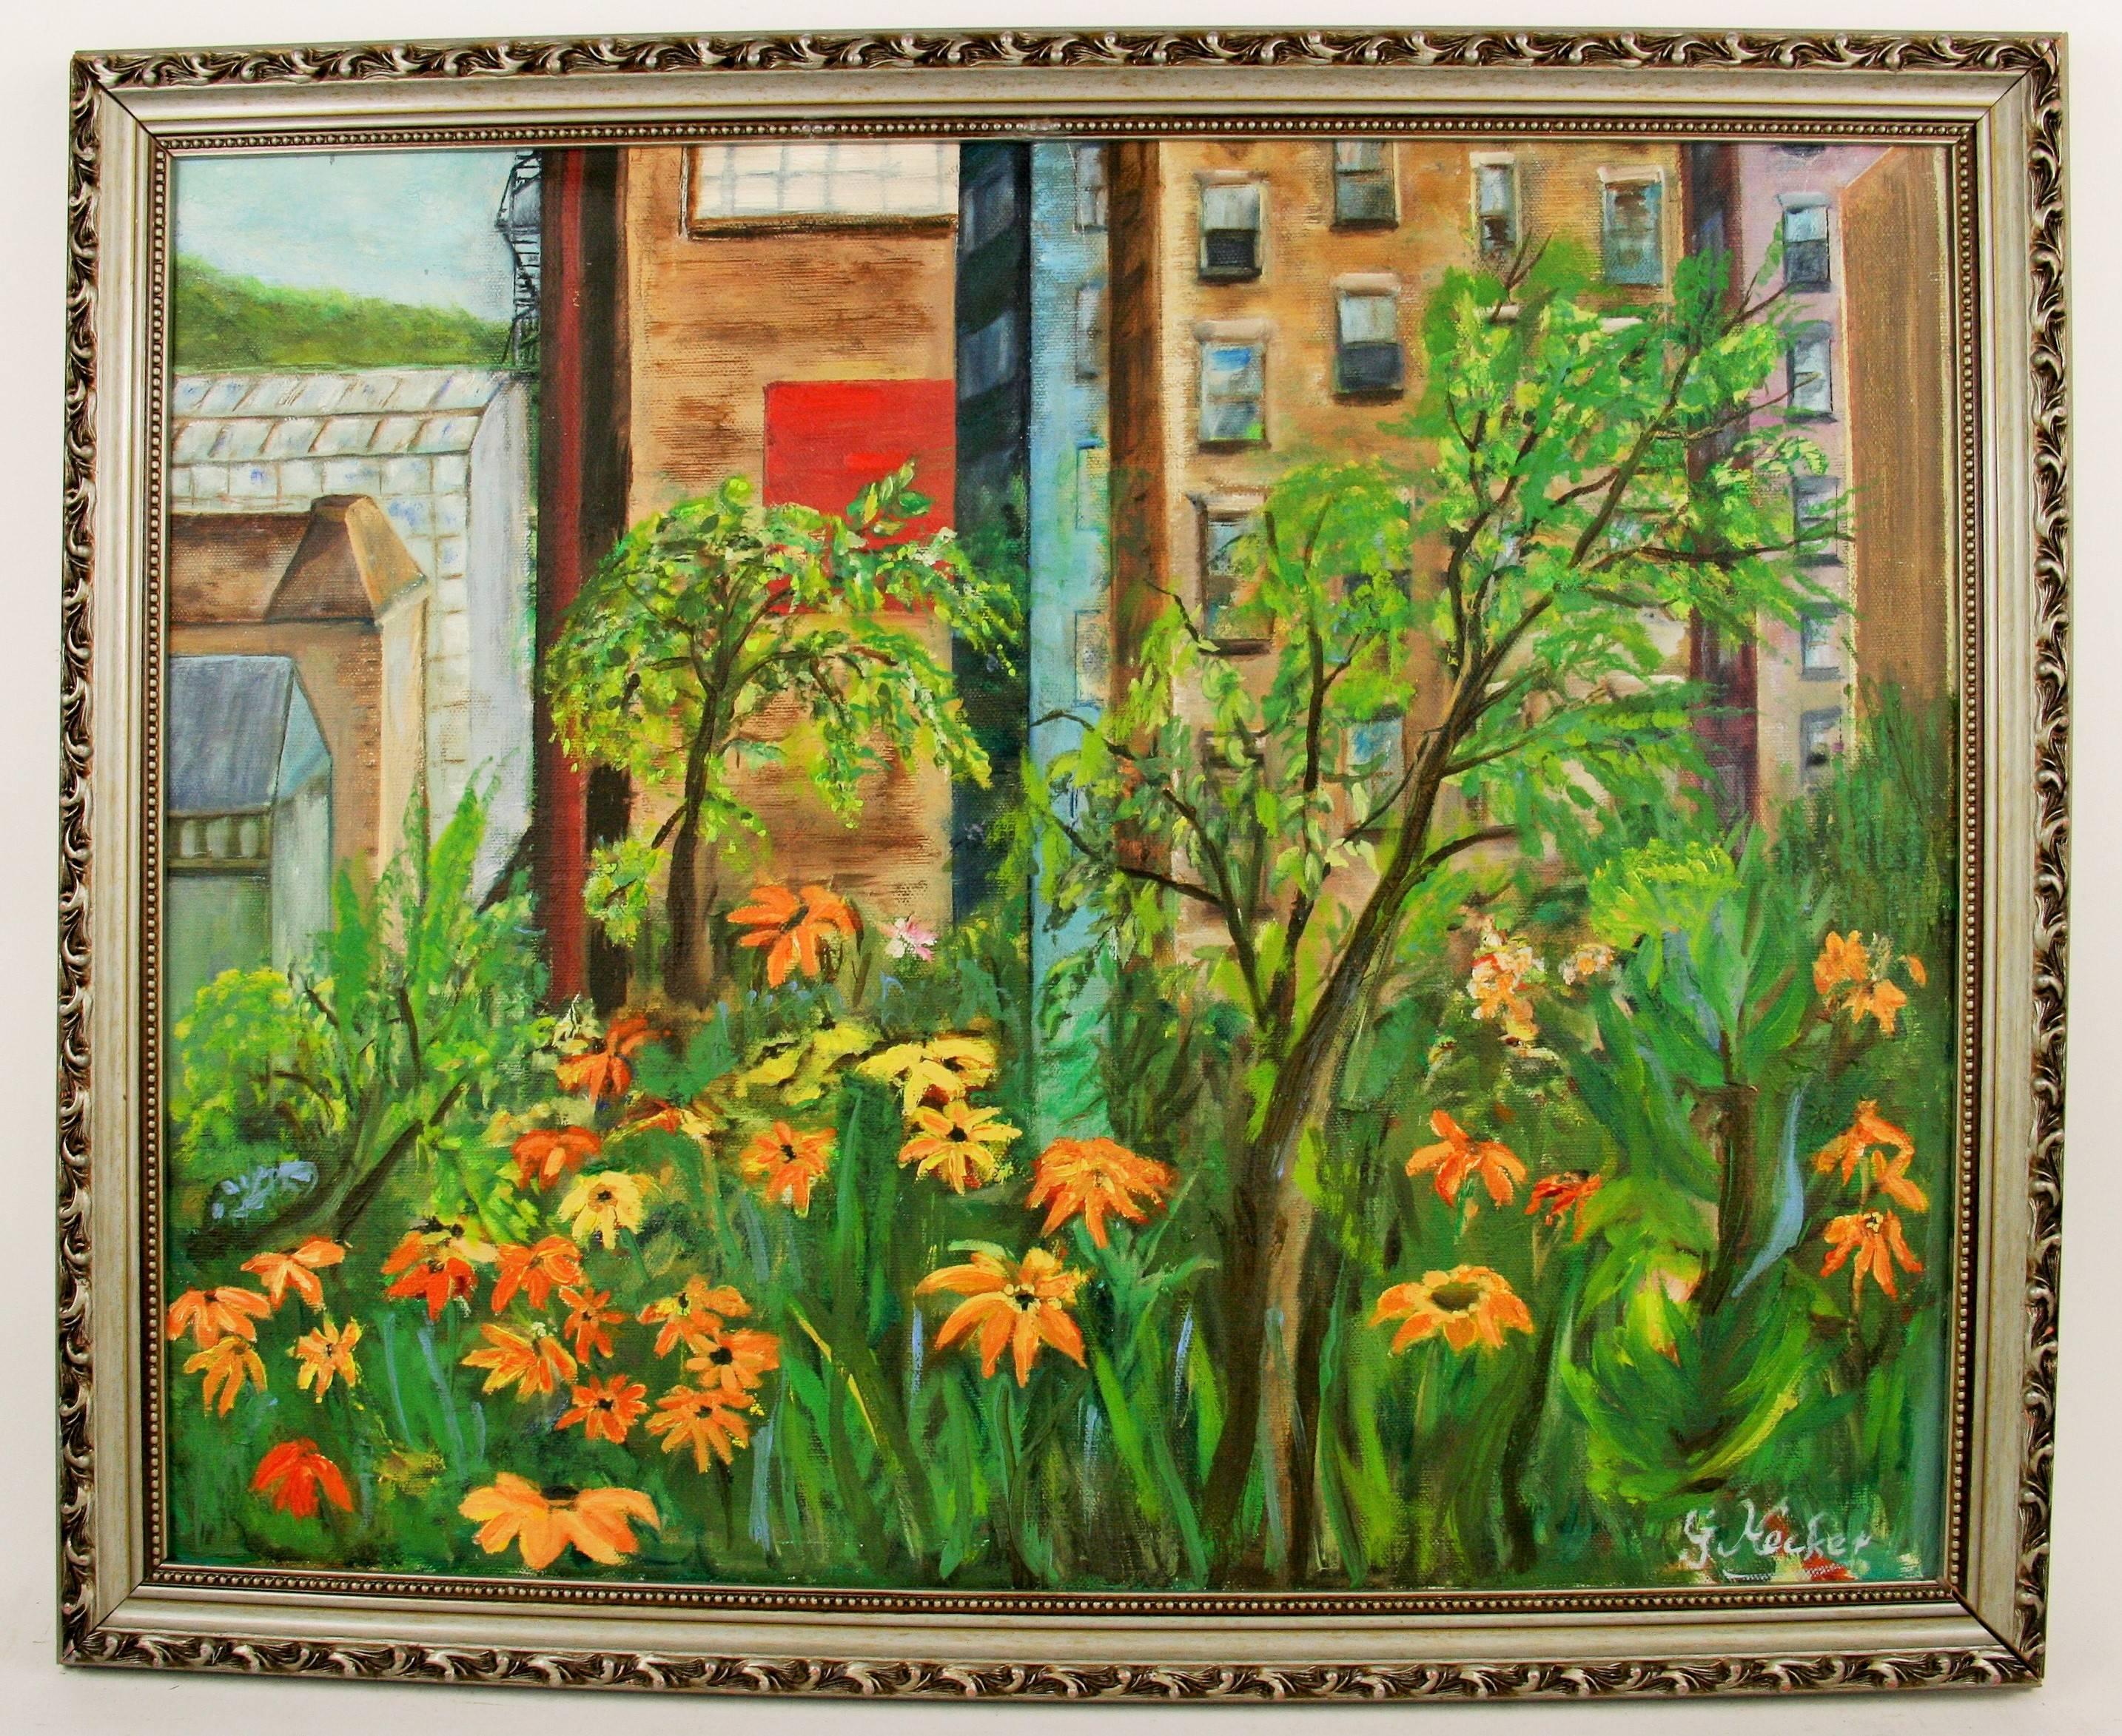  Brooklyn Garden  City Scape Landscape  Painting - Brown Landscape Painting by Unknown